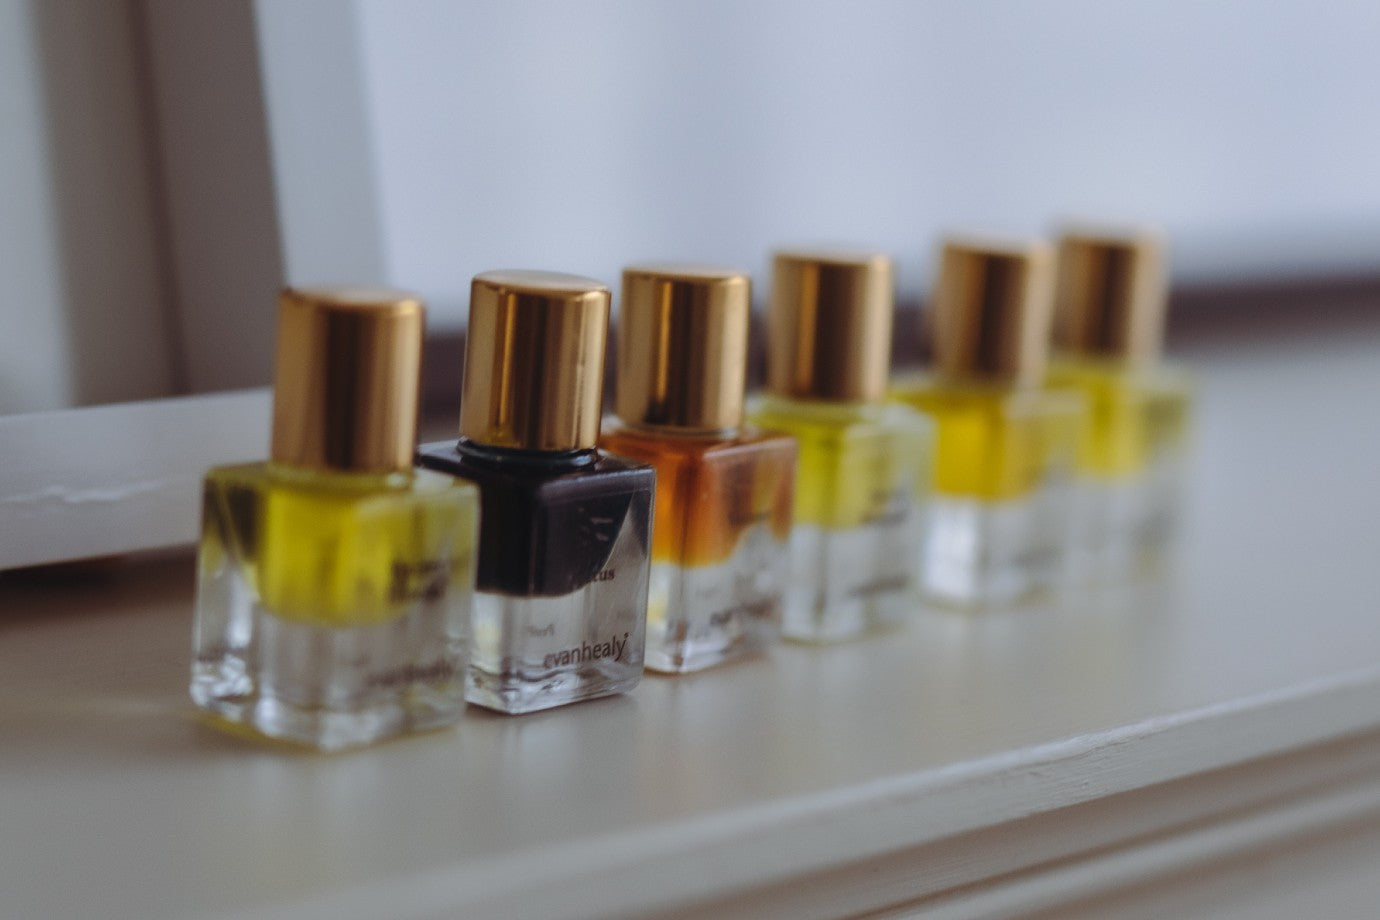 evanhealy organic essential oil perfume assortment